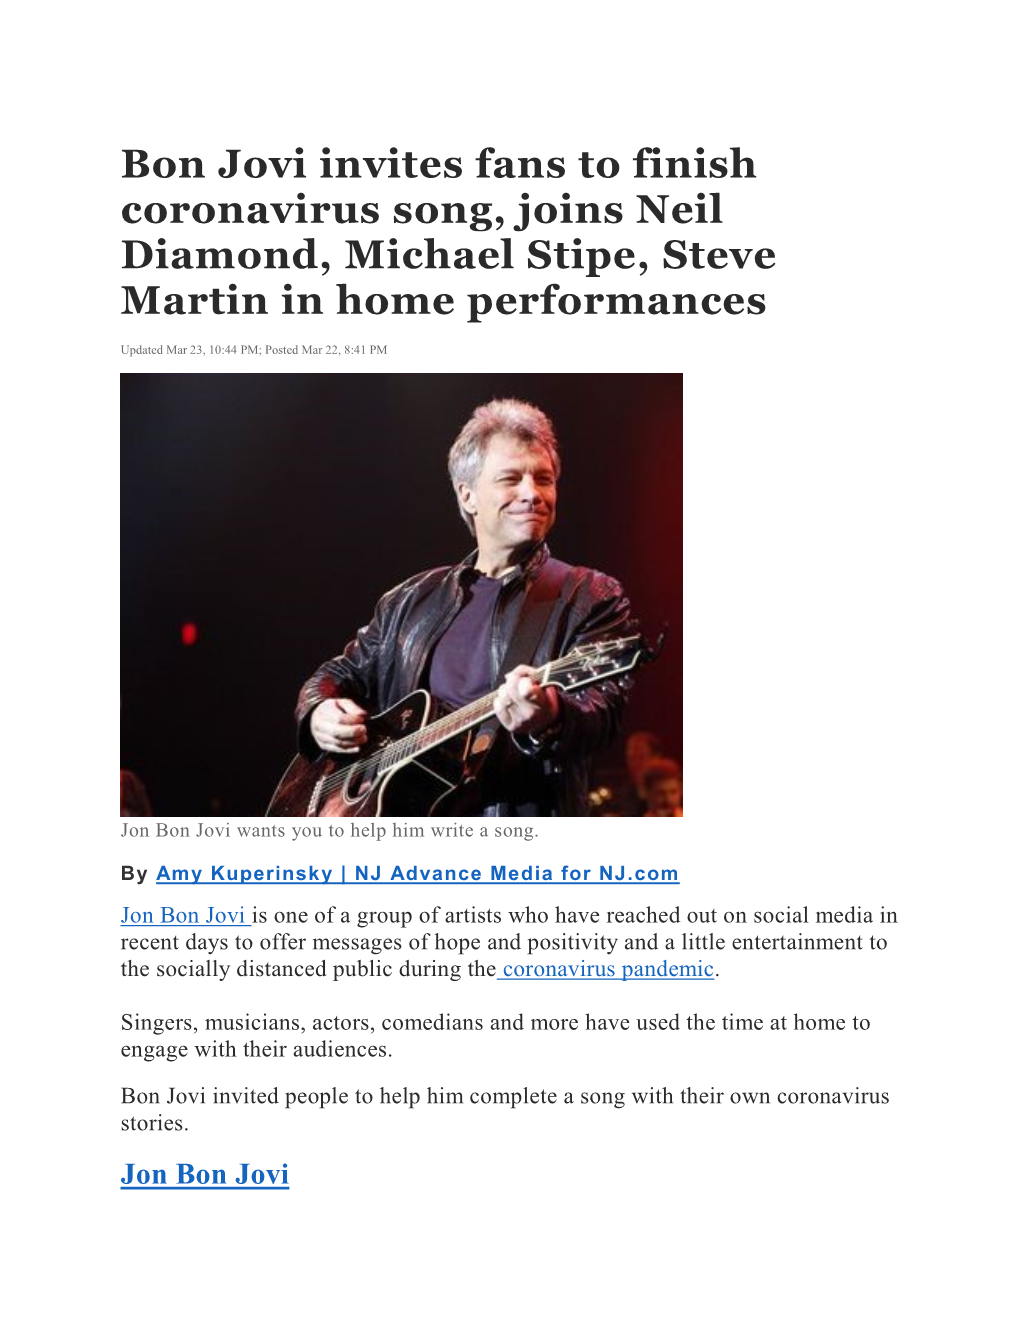 Bon Jovi Invites Fans to Finish Coronavirus Song, Joins Neil Diamond, Michael Stipe, Steve Martin in Home Performances